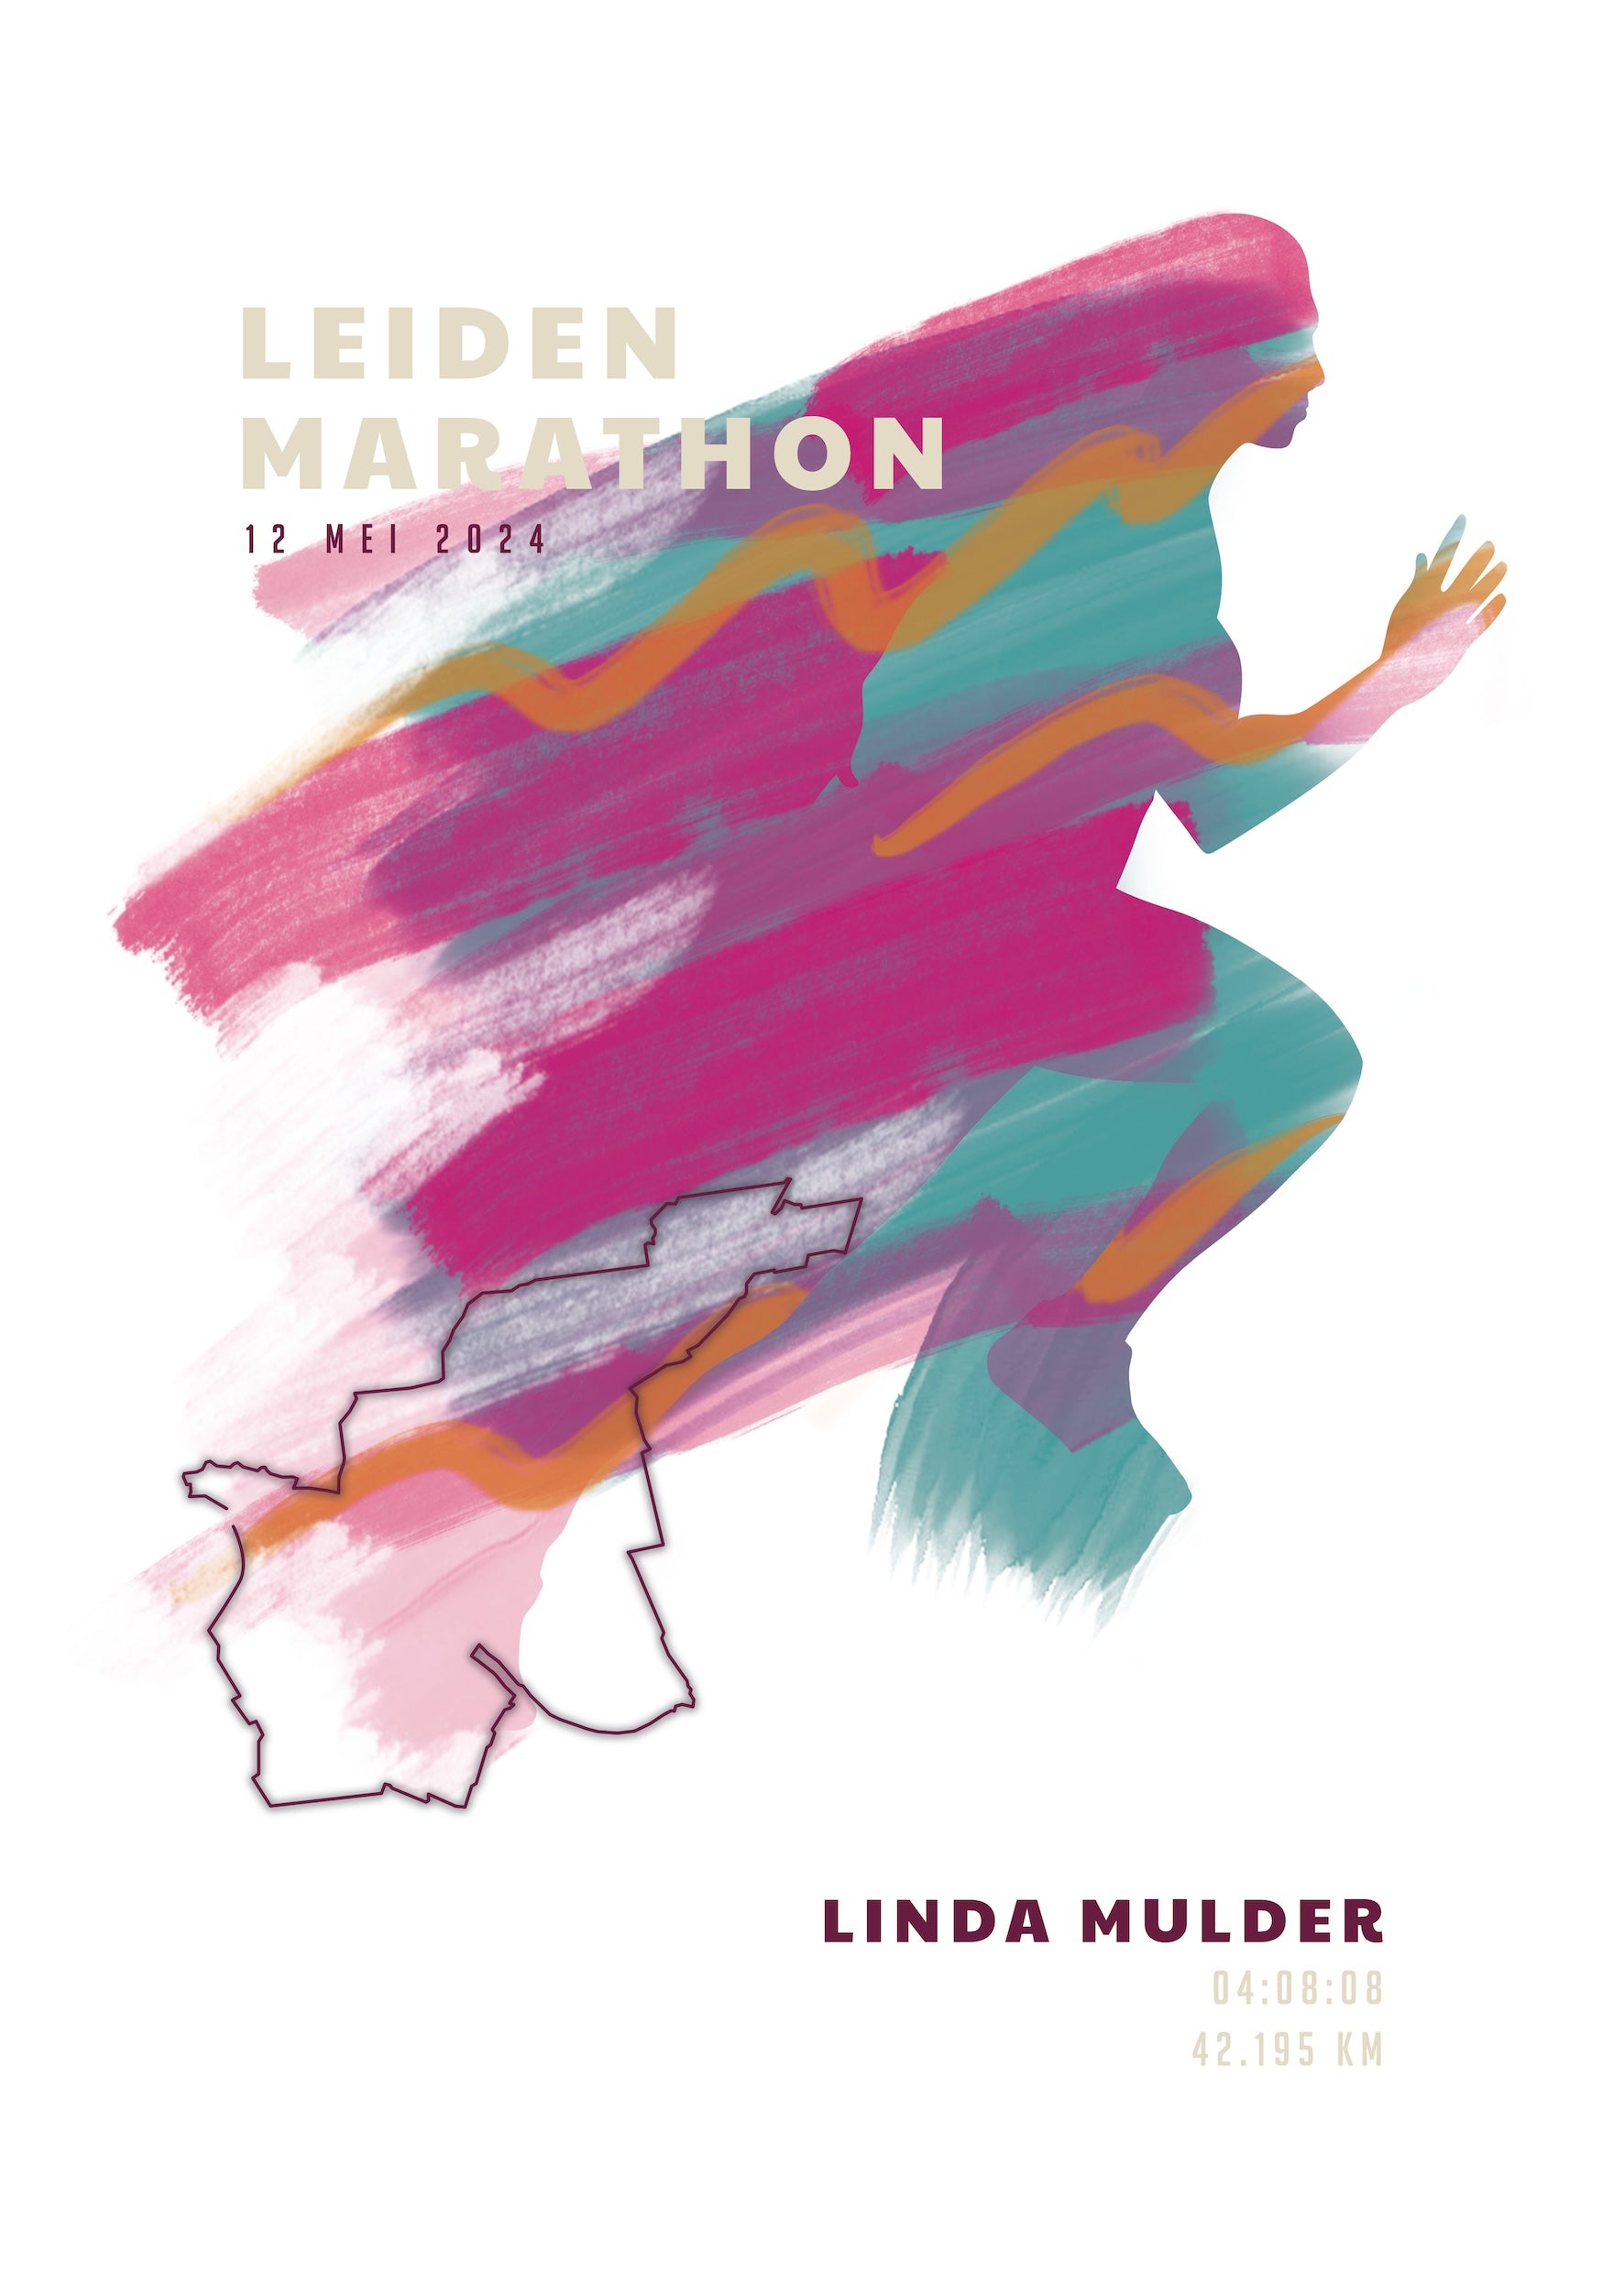 Leiden Marathon - Sportive Art - Poster